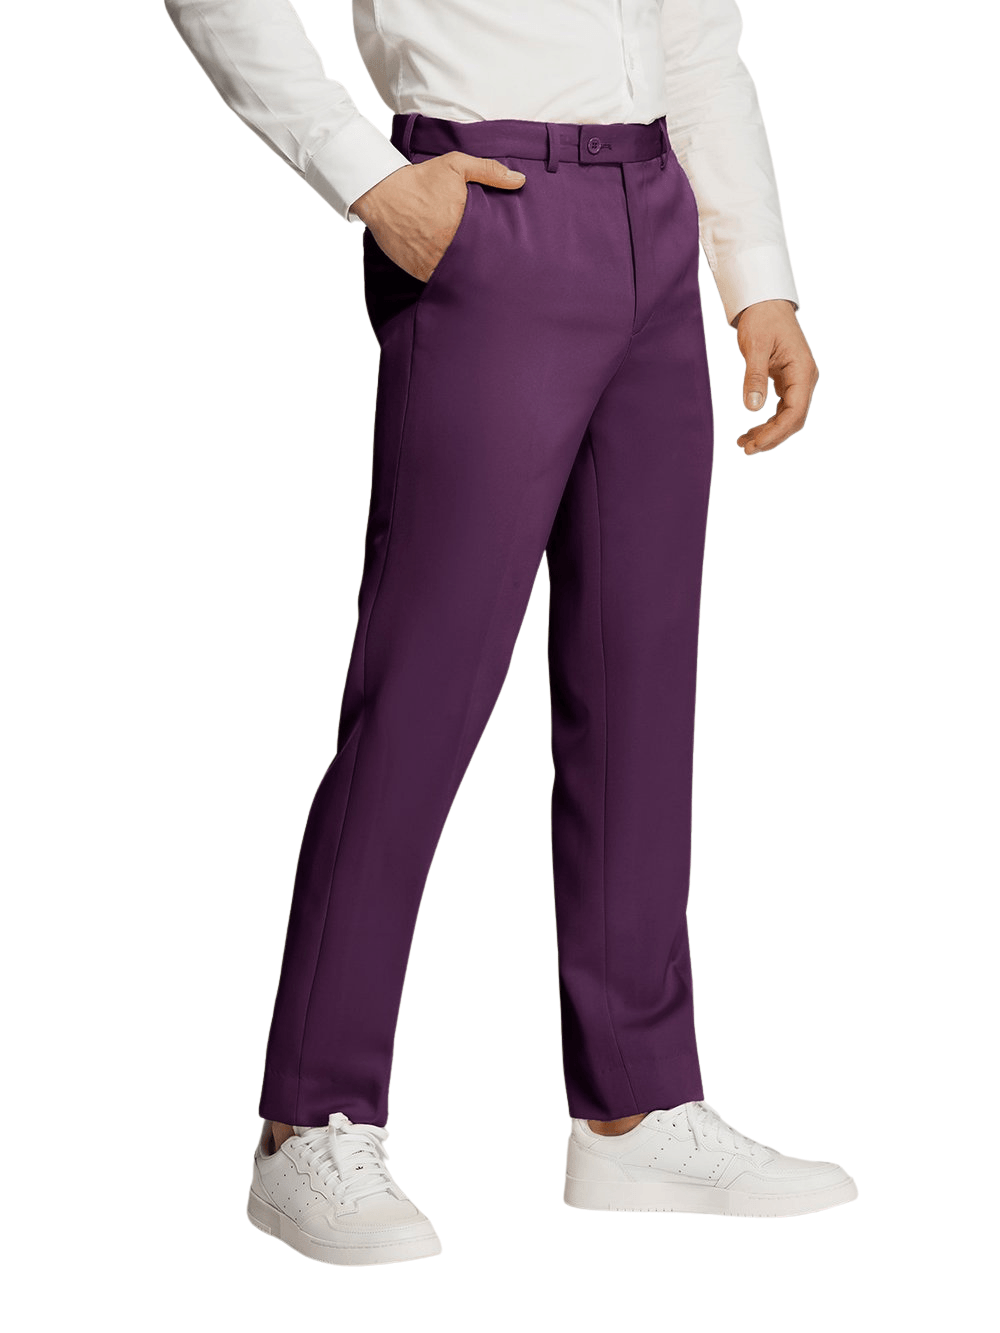 Purple Microfiber Pants